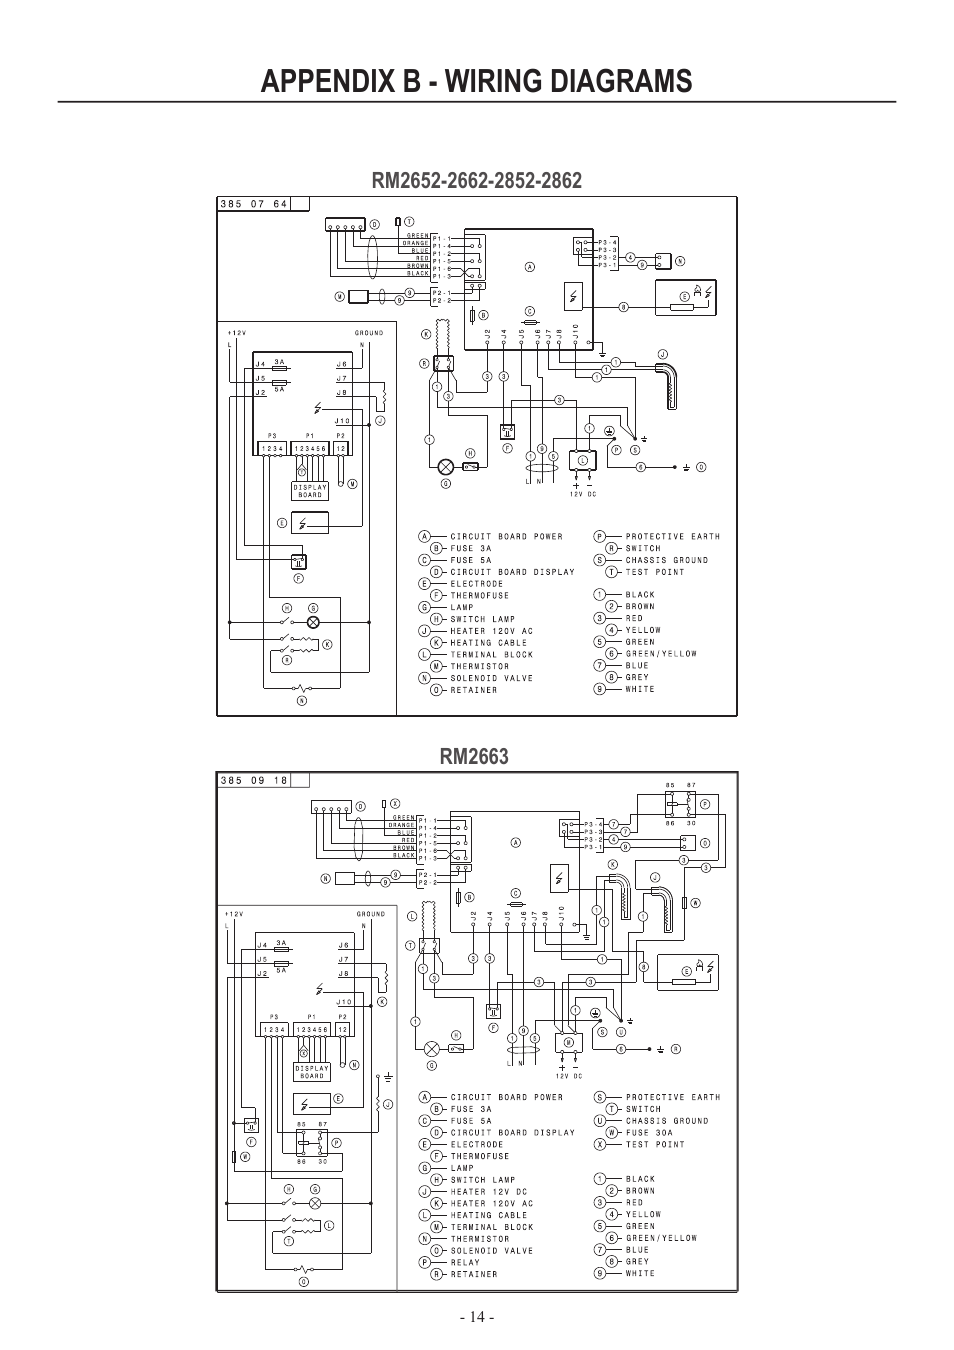 Diagram Ge Refrigerator Wiring Diagrams Full Version Hd Quality Wiring Diagrams Networkwiringlosangeles Parkhotelginevra It